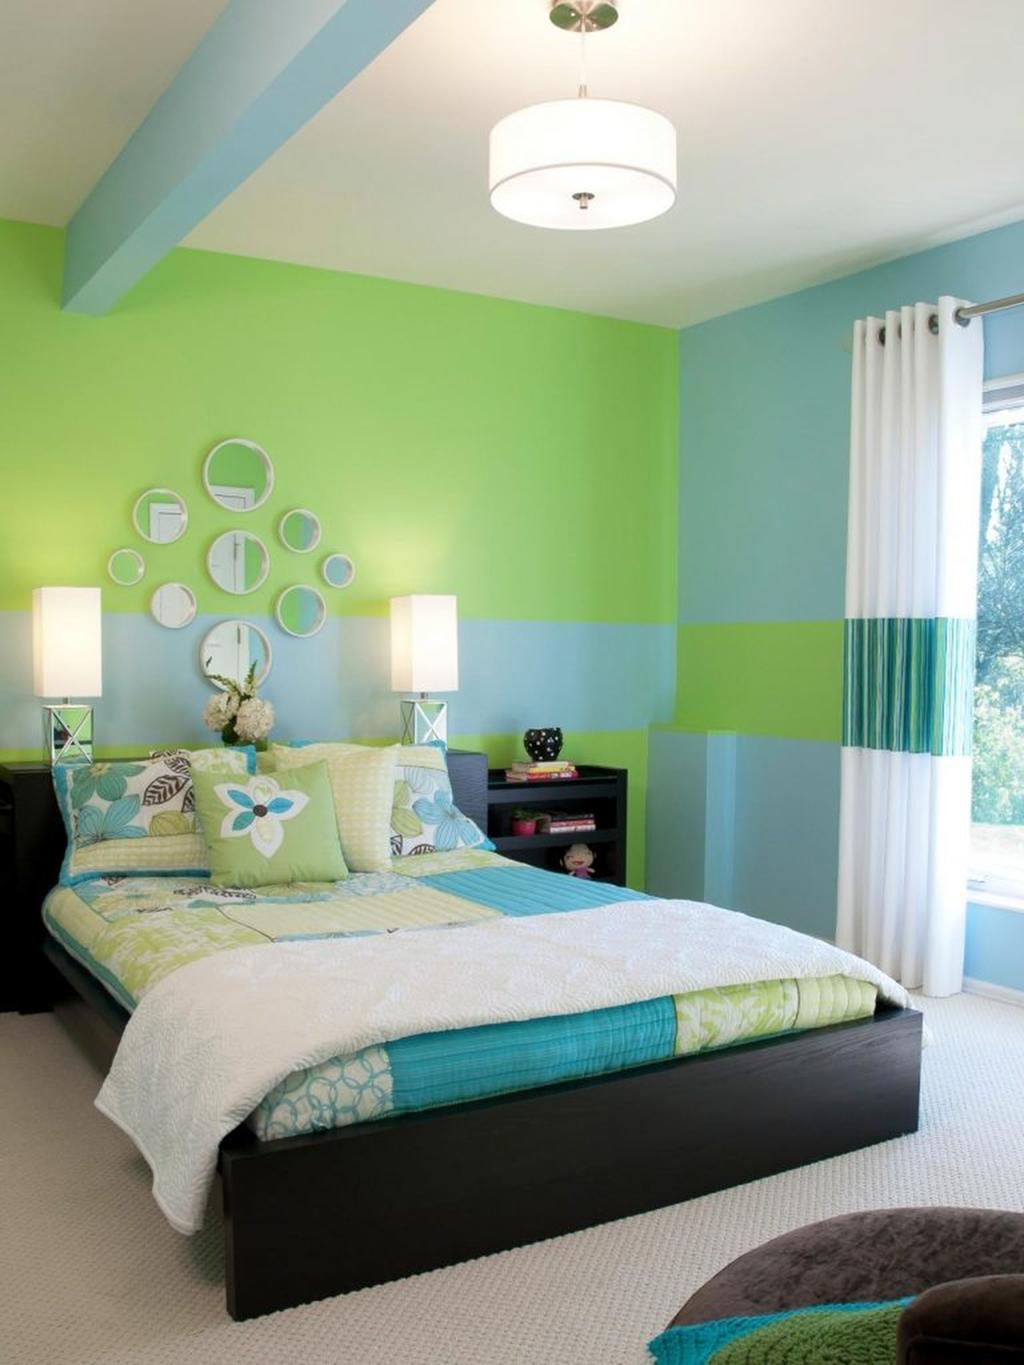 simple bedroom decoration bedroom:91162 girls bedroom decor teens room small simple then 19 inspiring  gallery 50+ LQBKAMA